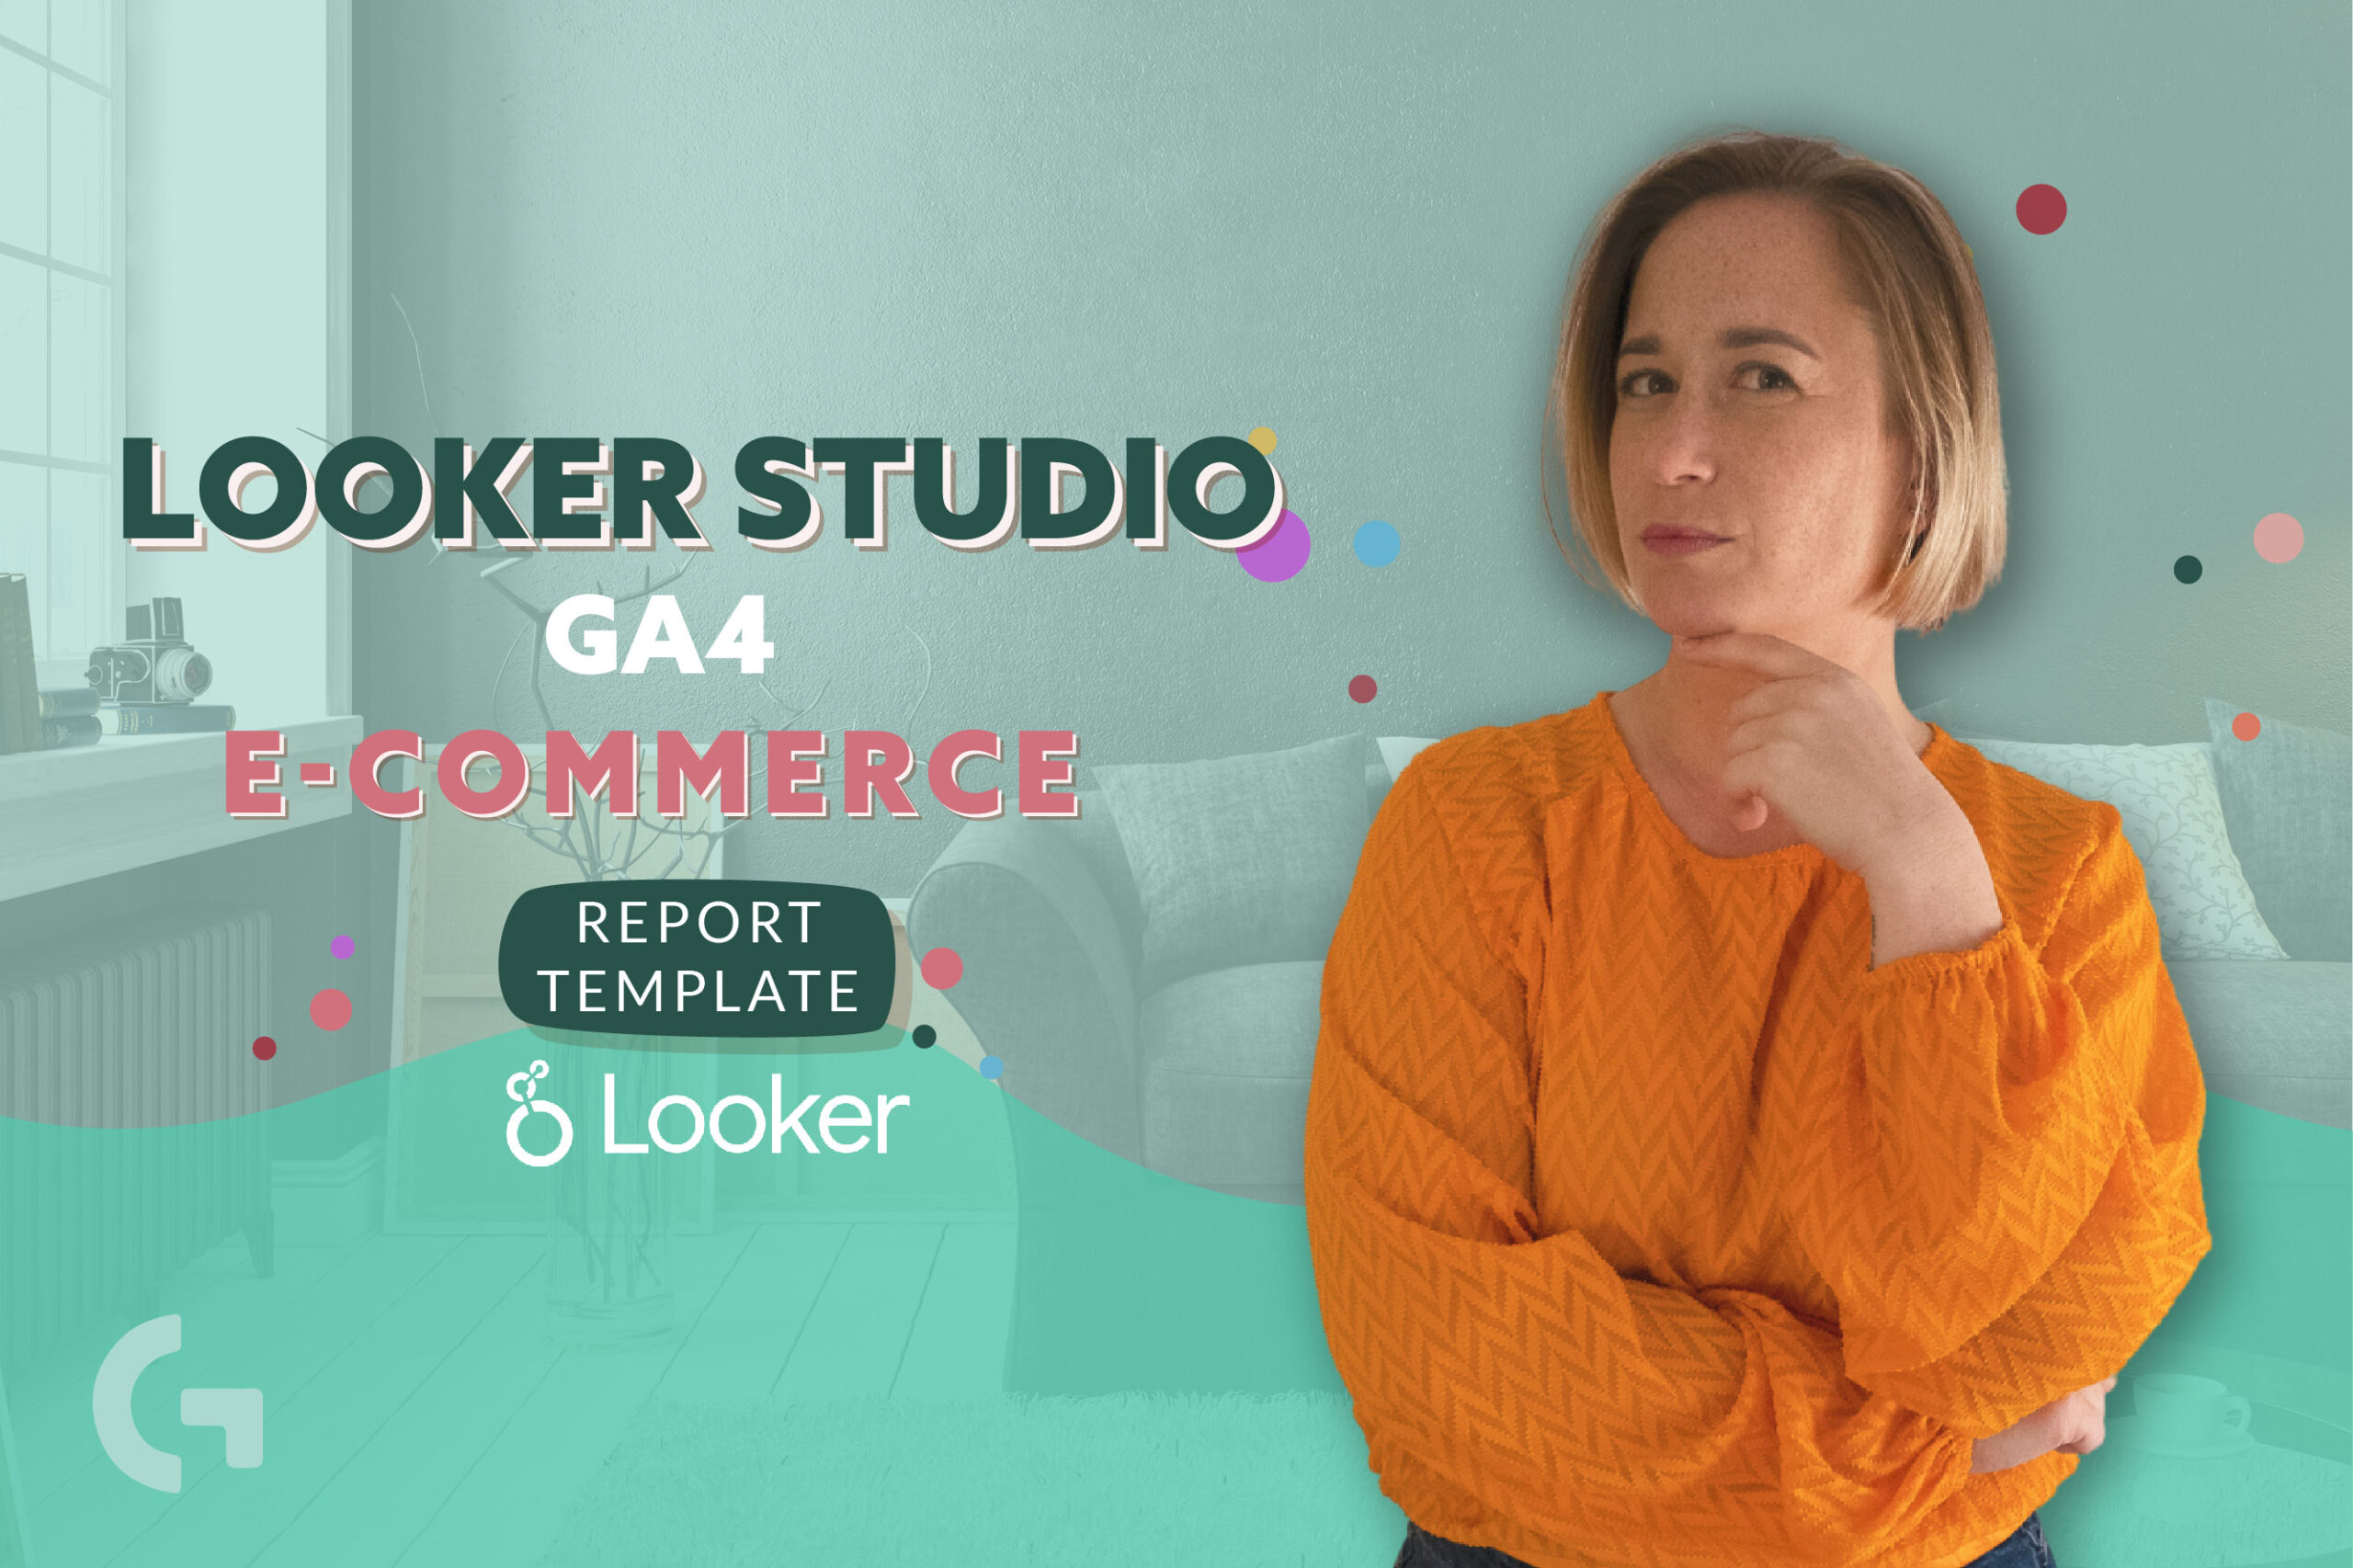 Looker Studio GA4 e-commerce report template overview